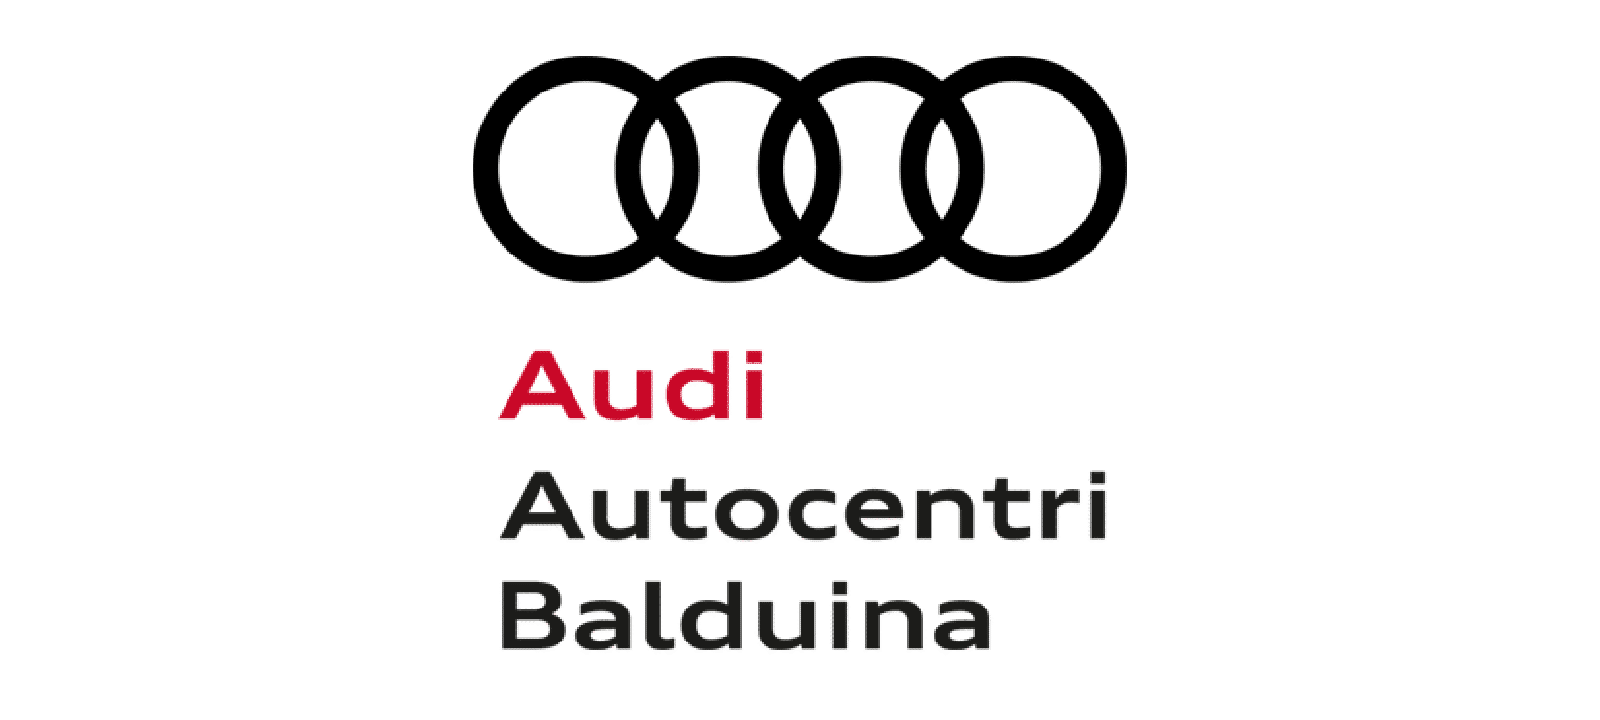 Logo Autocentri Balduina - Audi